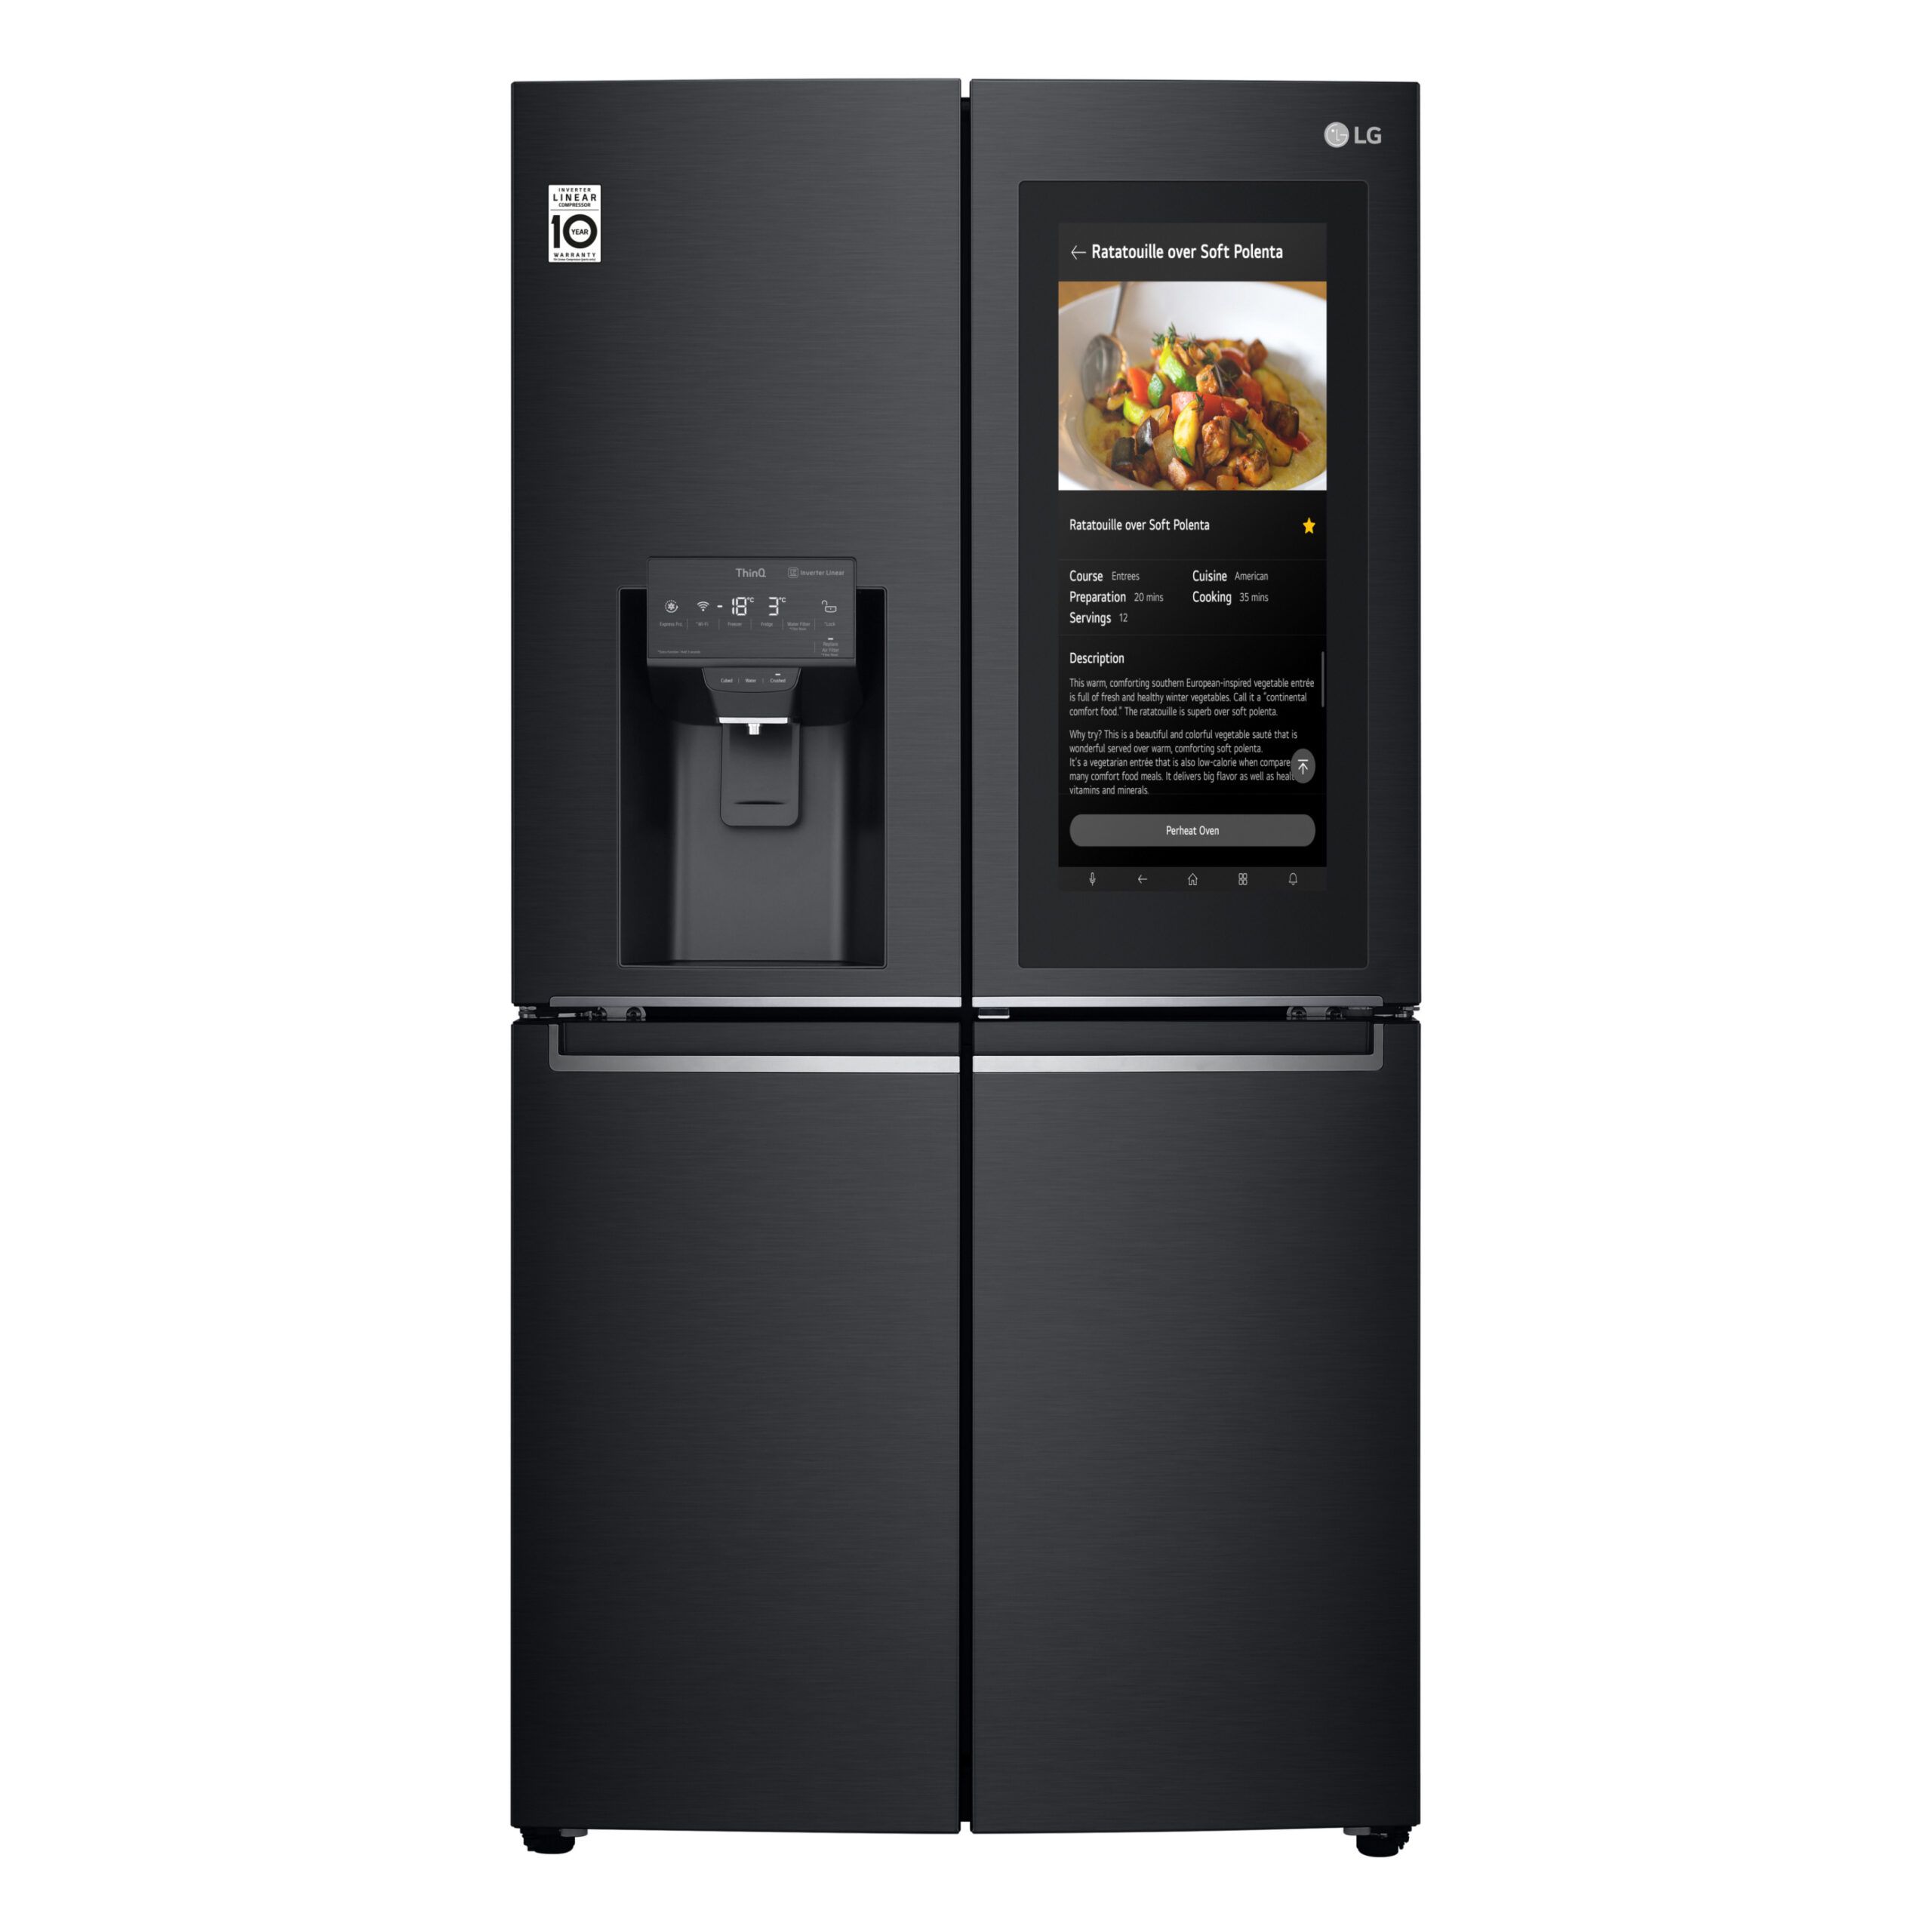 LG InstaView ThinQ smart refrigerator